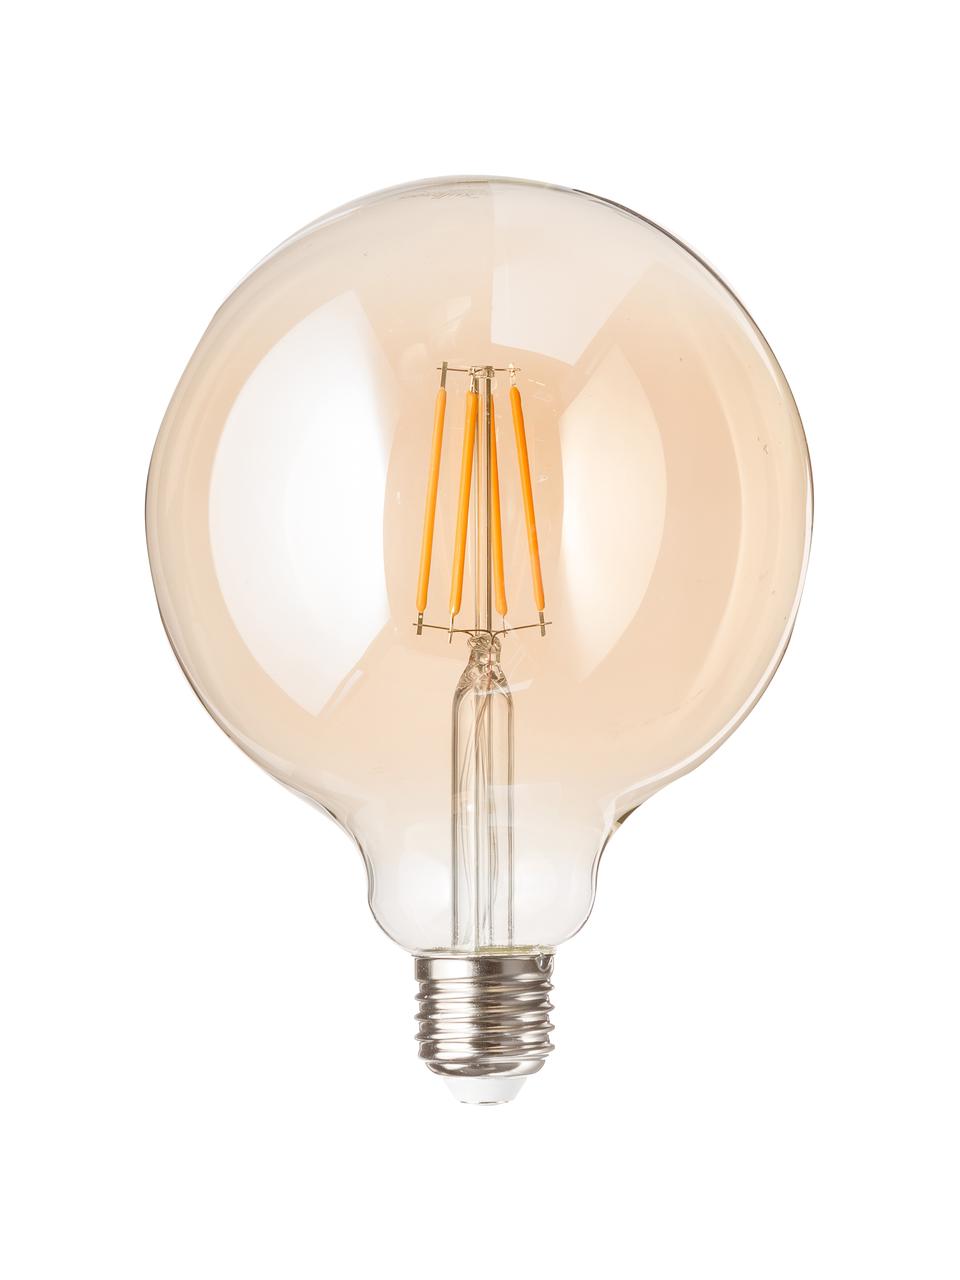 LED lamp Jukar (E27 / 1.9W) 2 stuks, Peertje: glas, Fitting: aluminium, Amberkleurig, Ø 12 x H 18 cm